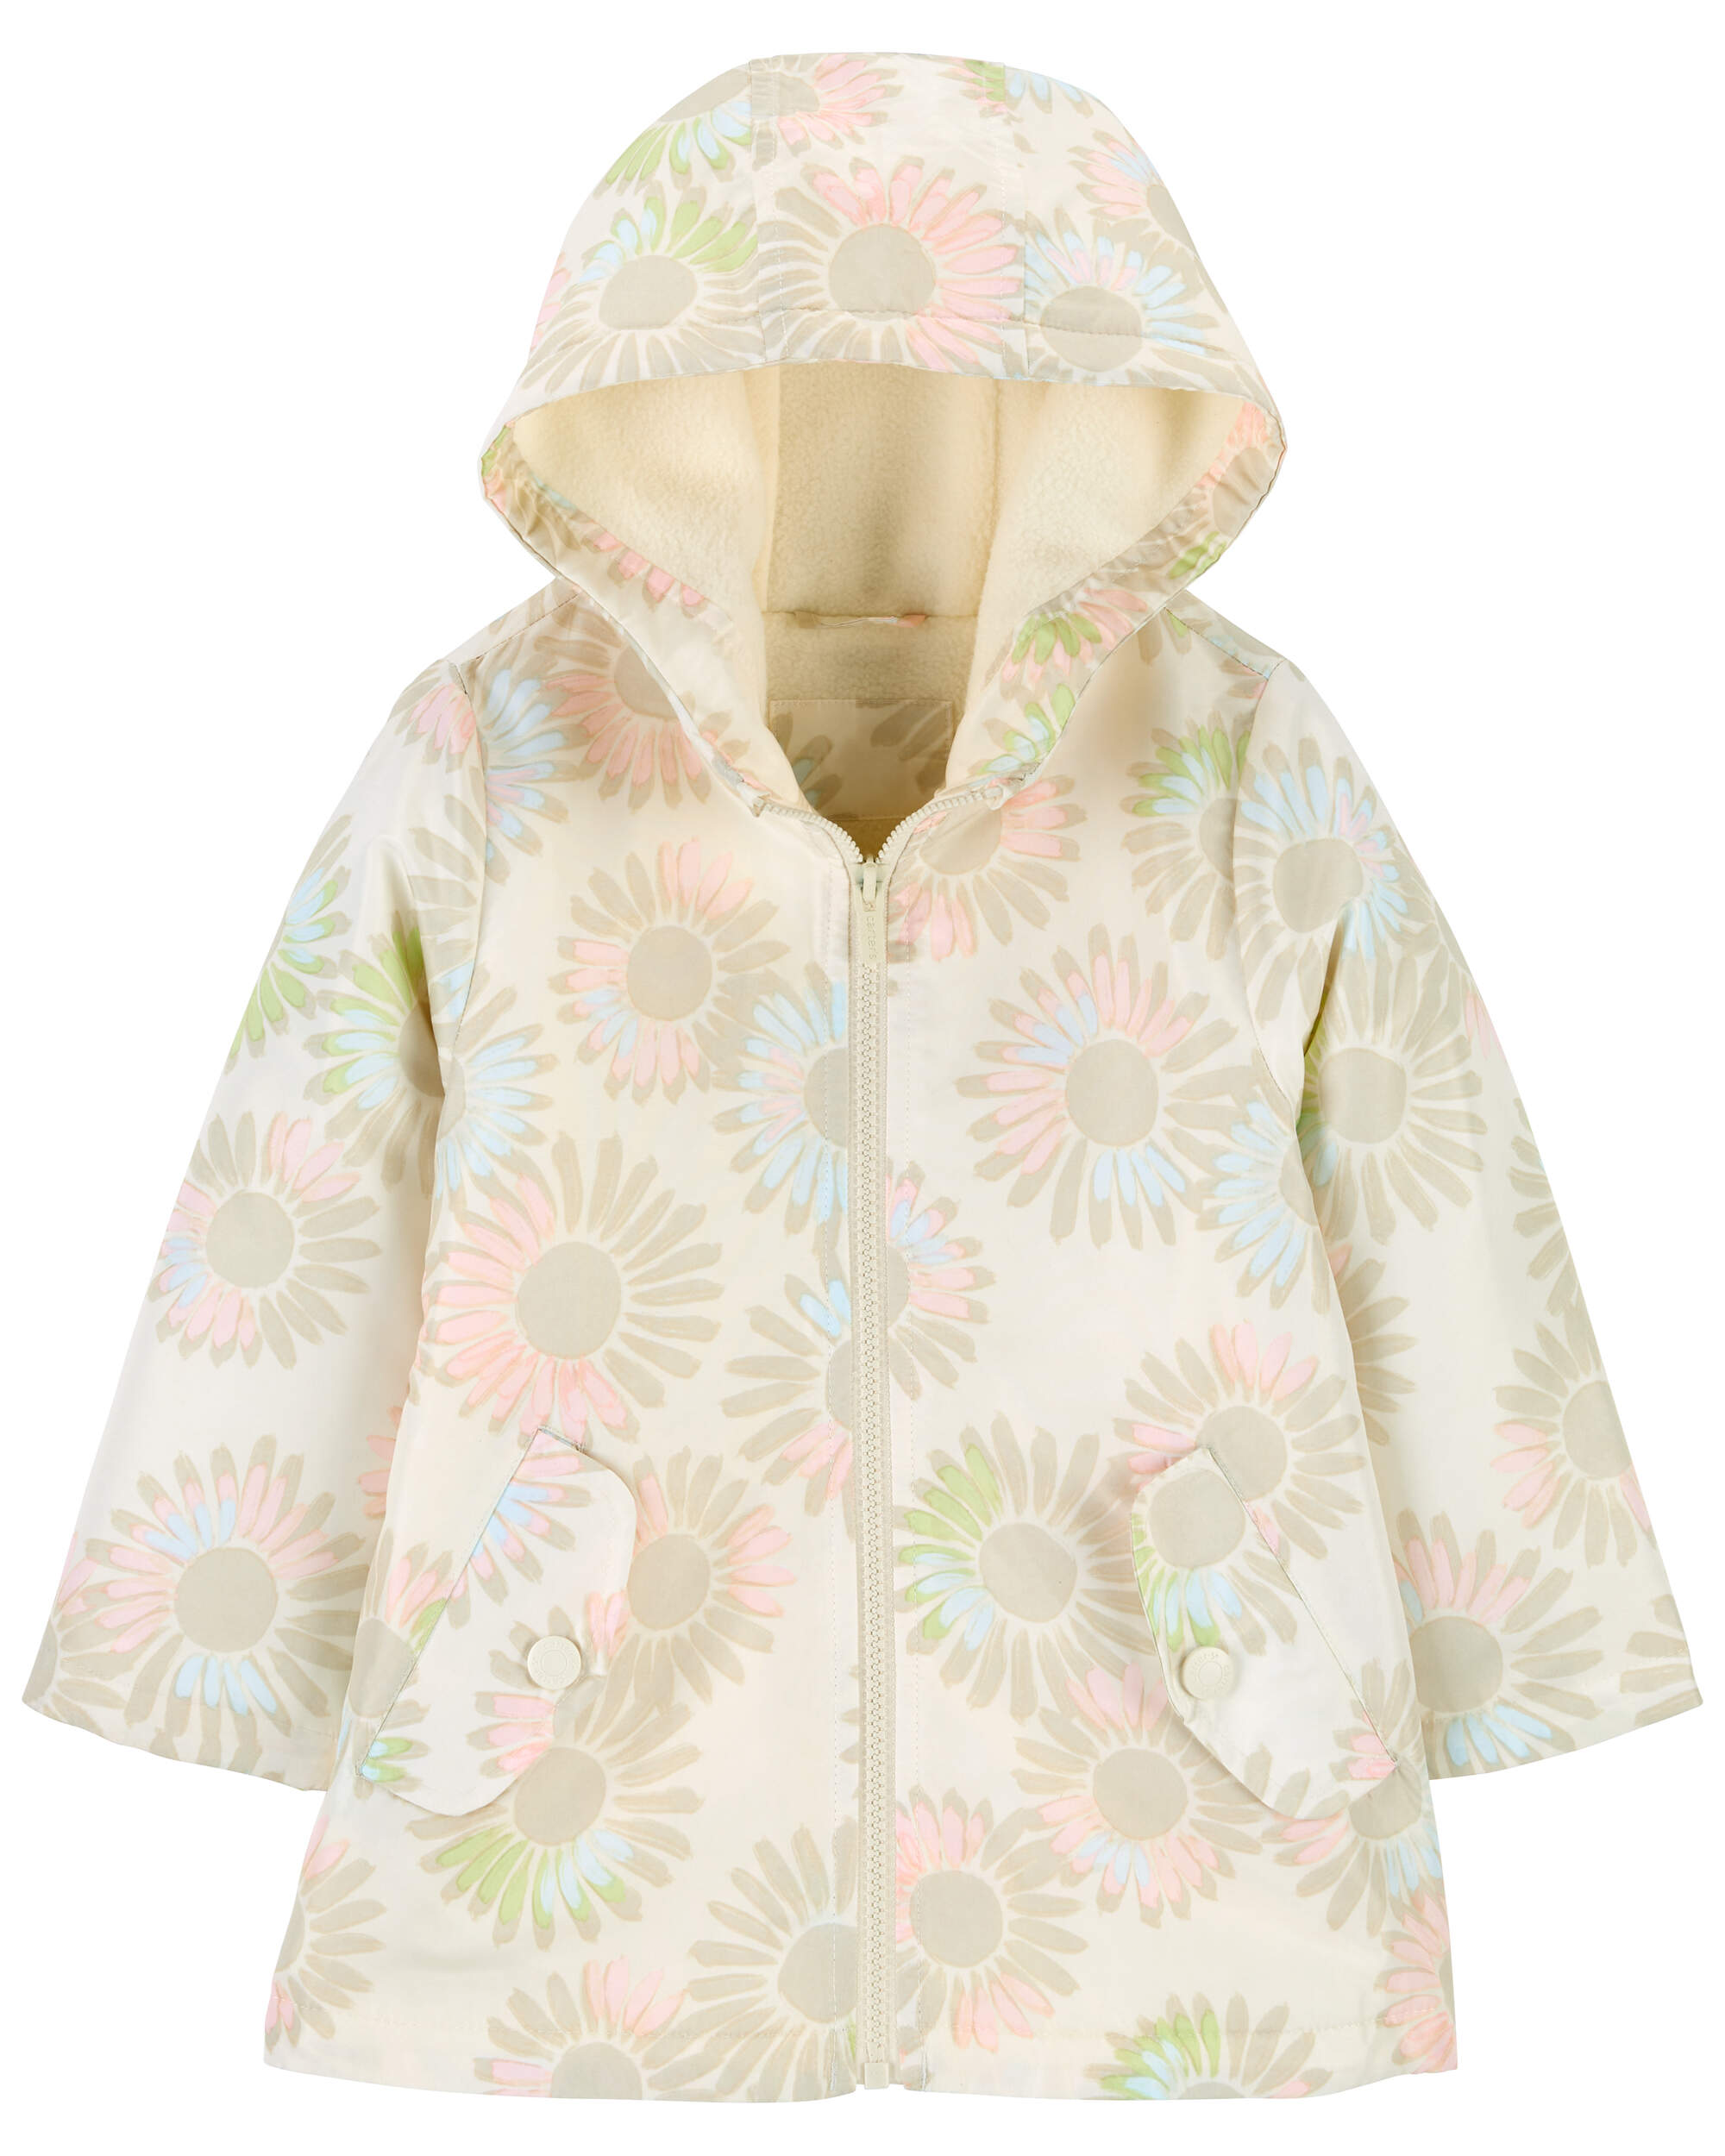 Toddler Girls Fleece-Lined Floral Print Rain Jacket 2T Carter's